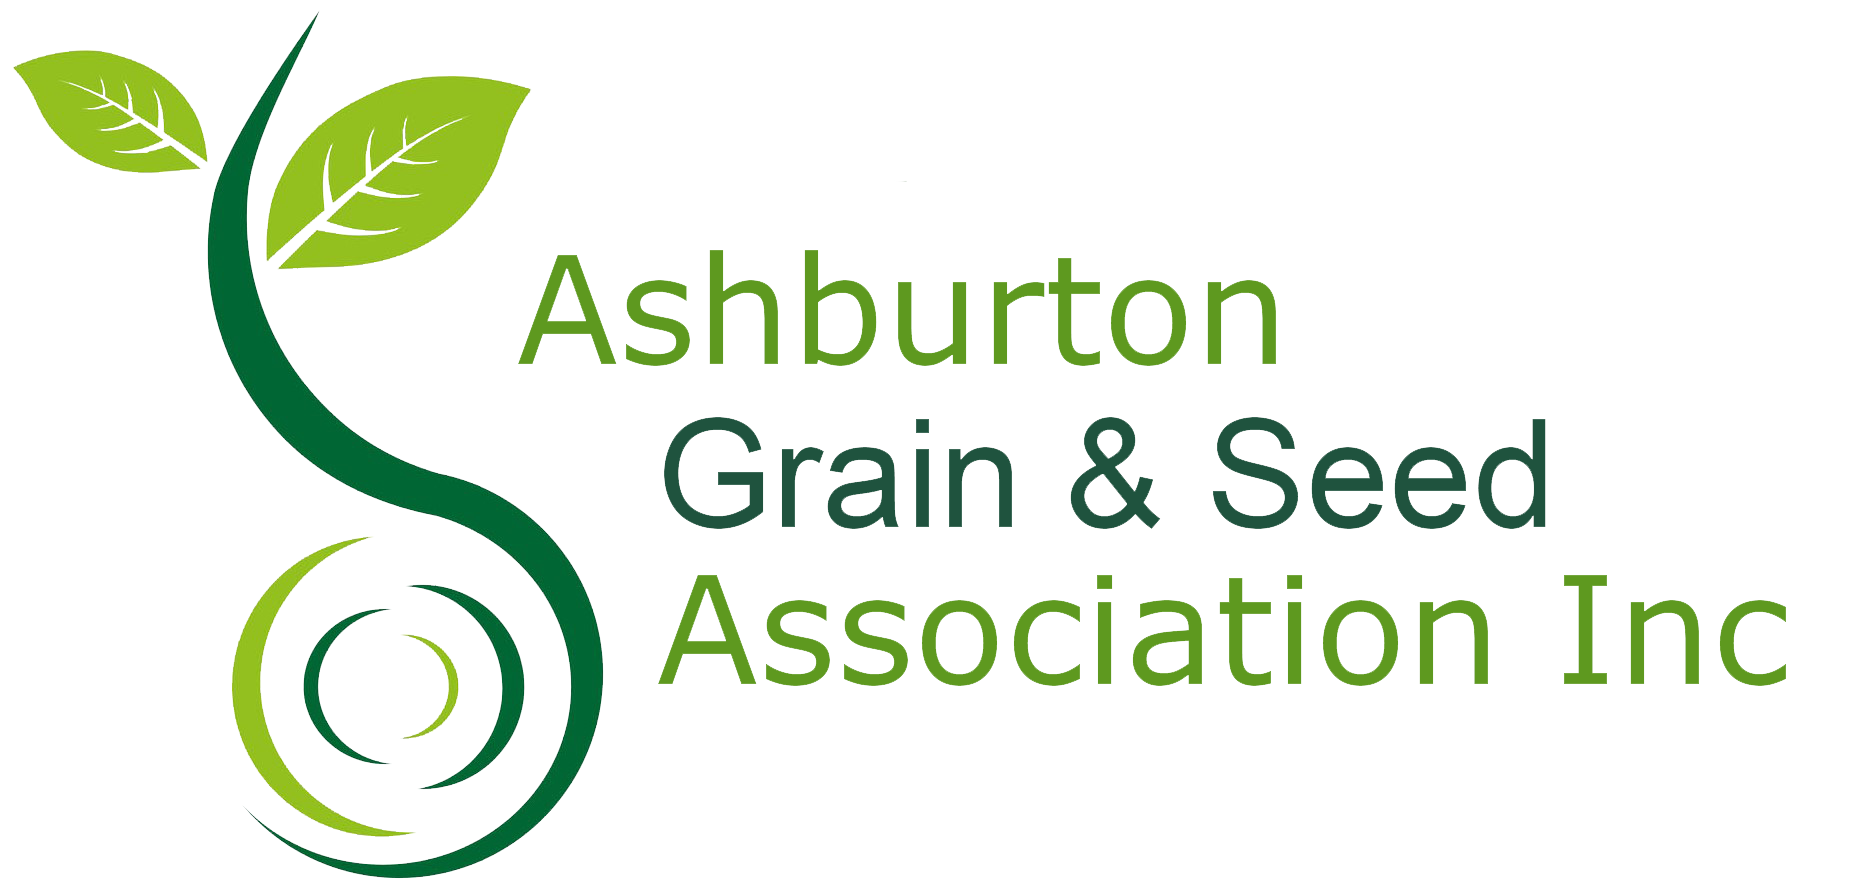 Ashburton Grain and Seed Association